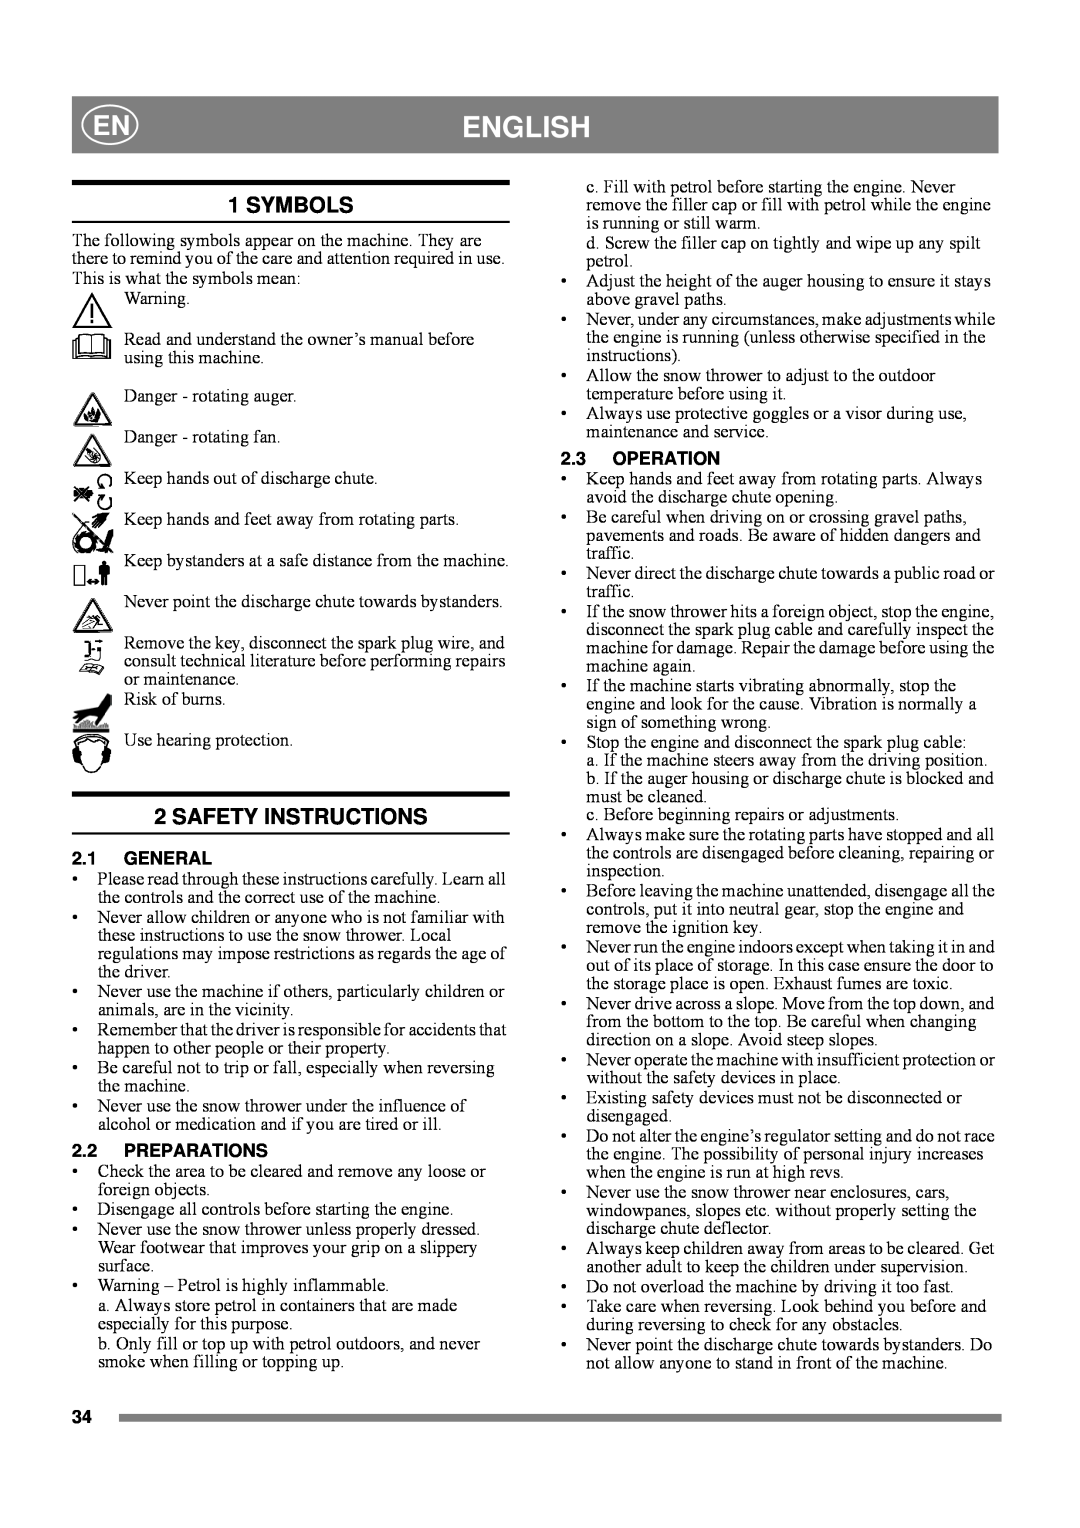 Stiga SNOW BREEZE, SNOW REX manual English, Symbols, Safety Instructions, General, Preparations, Operation 